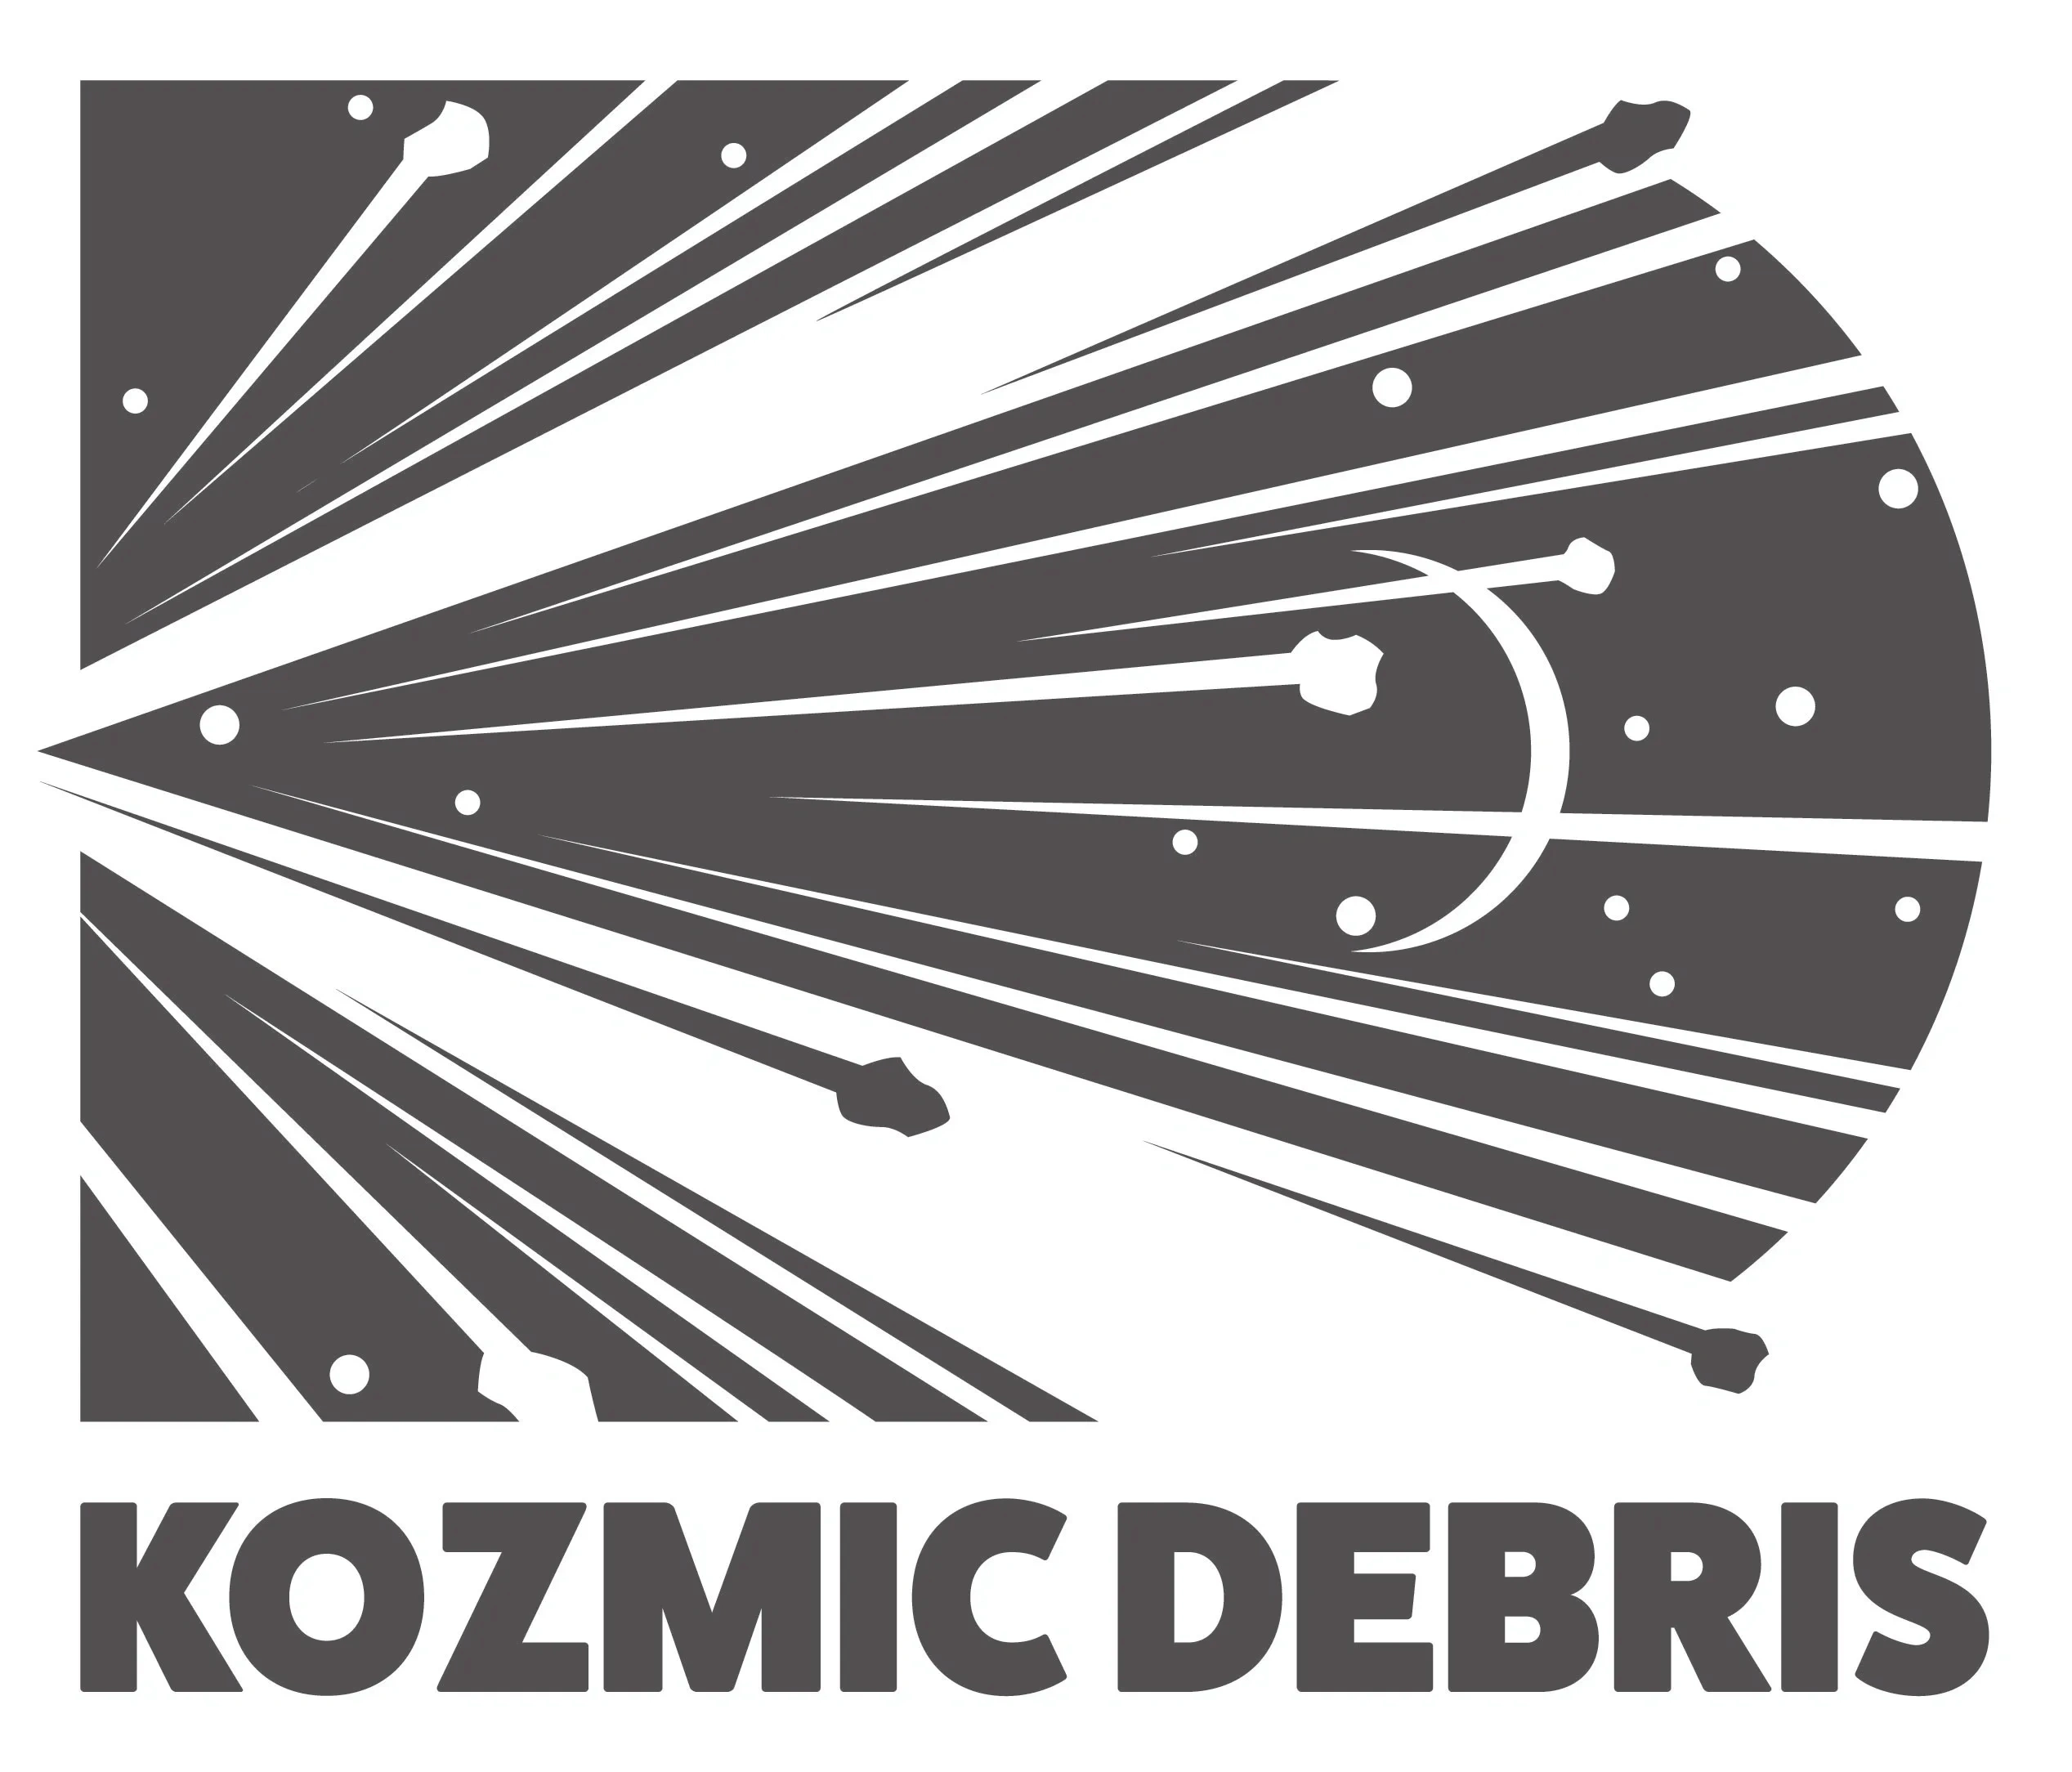 Kozmic Debris logo was created by Timothy Shamey.